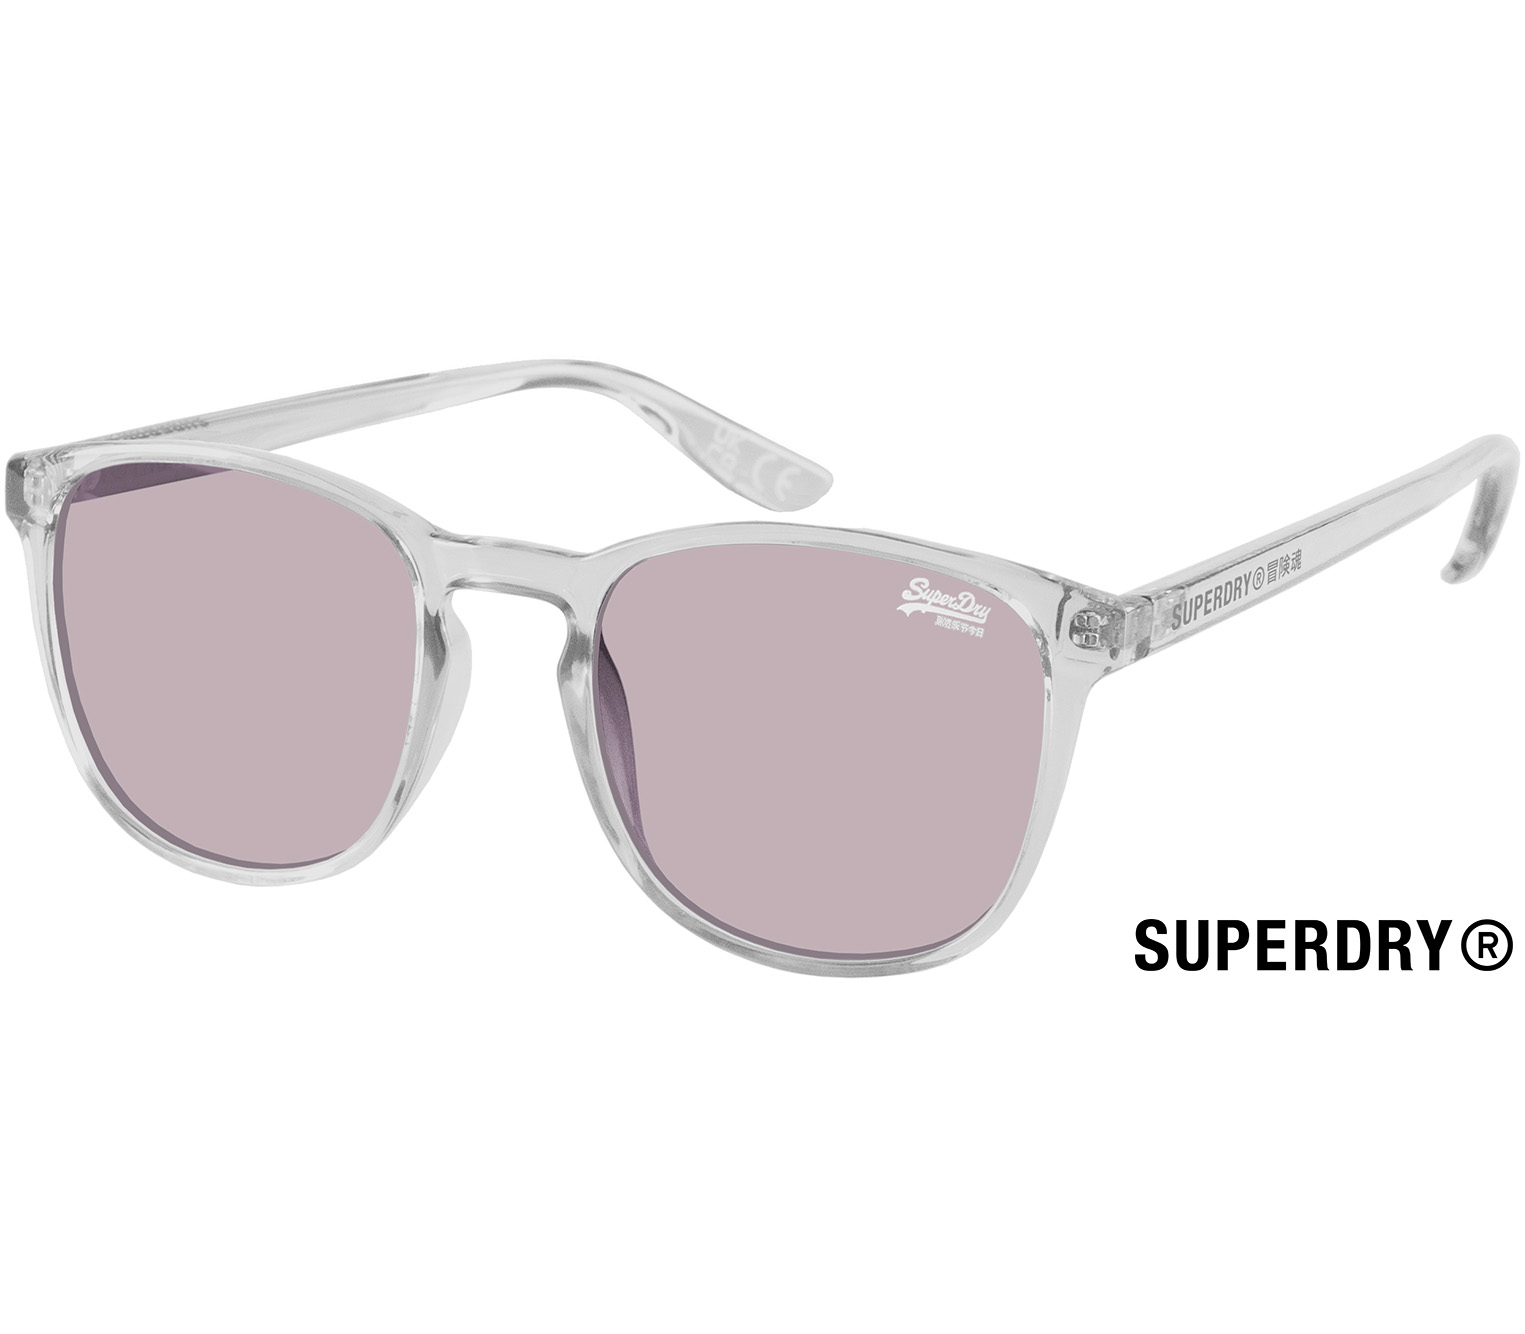 Main Image (Angle) - Shockwave (Grey) Sunglasses